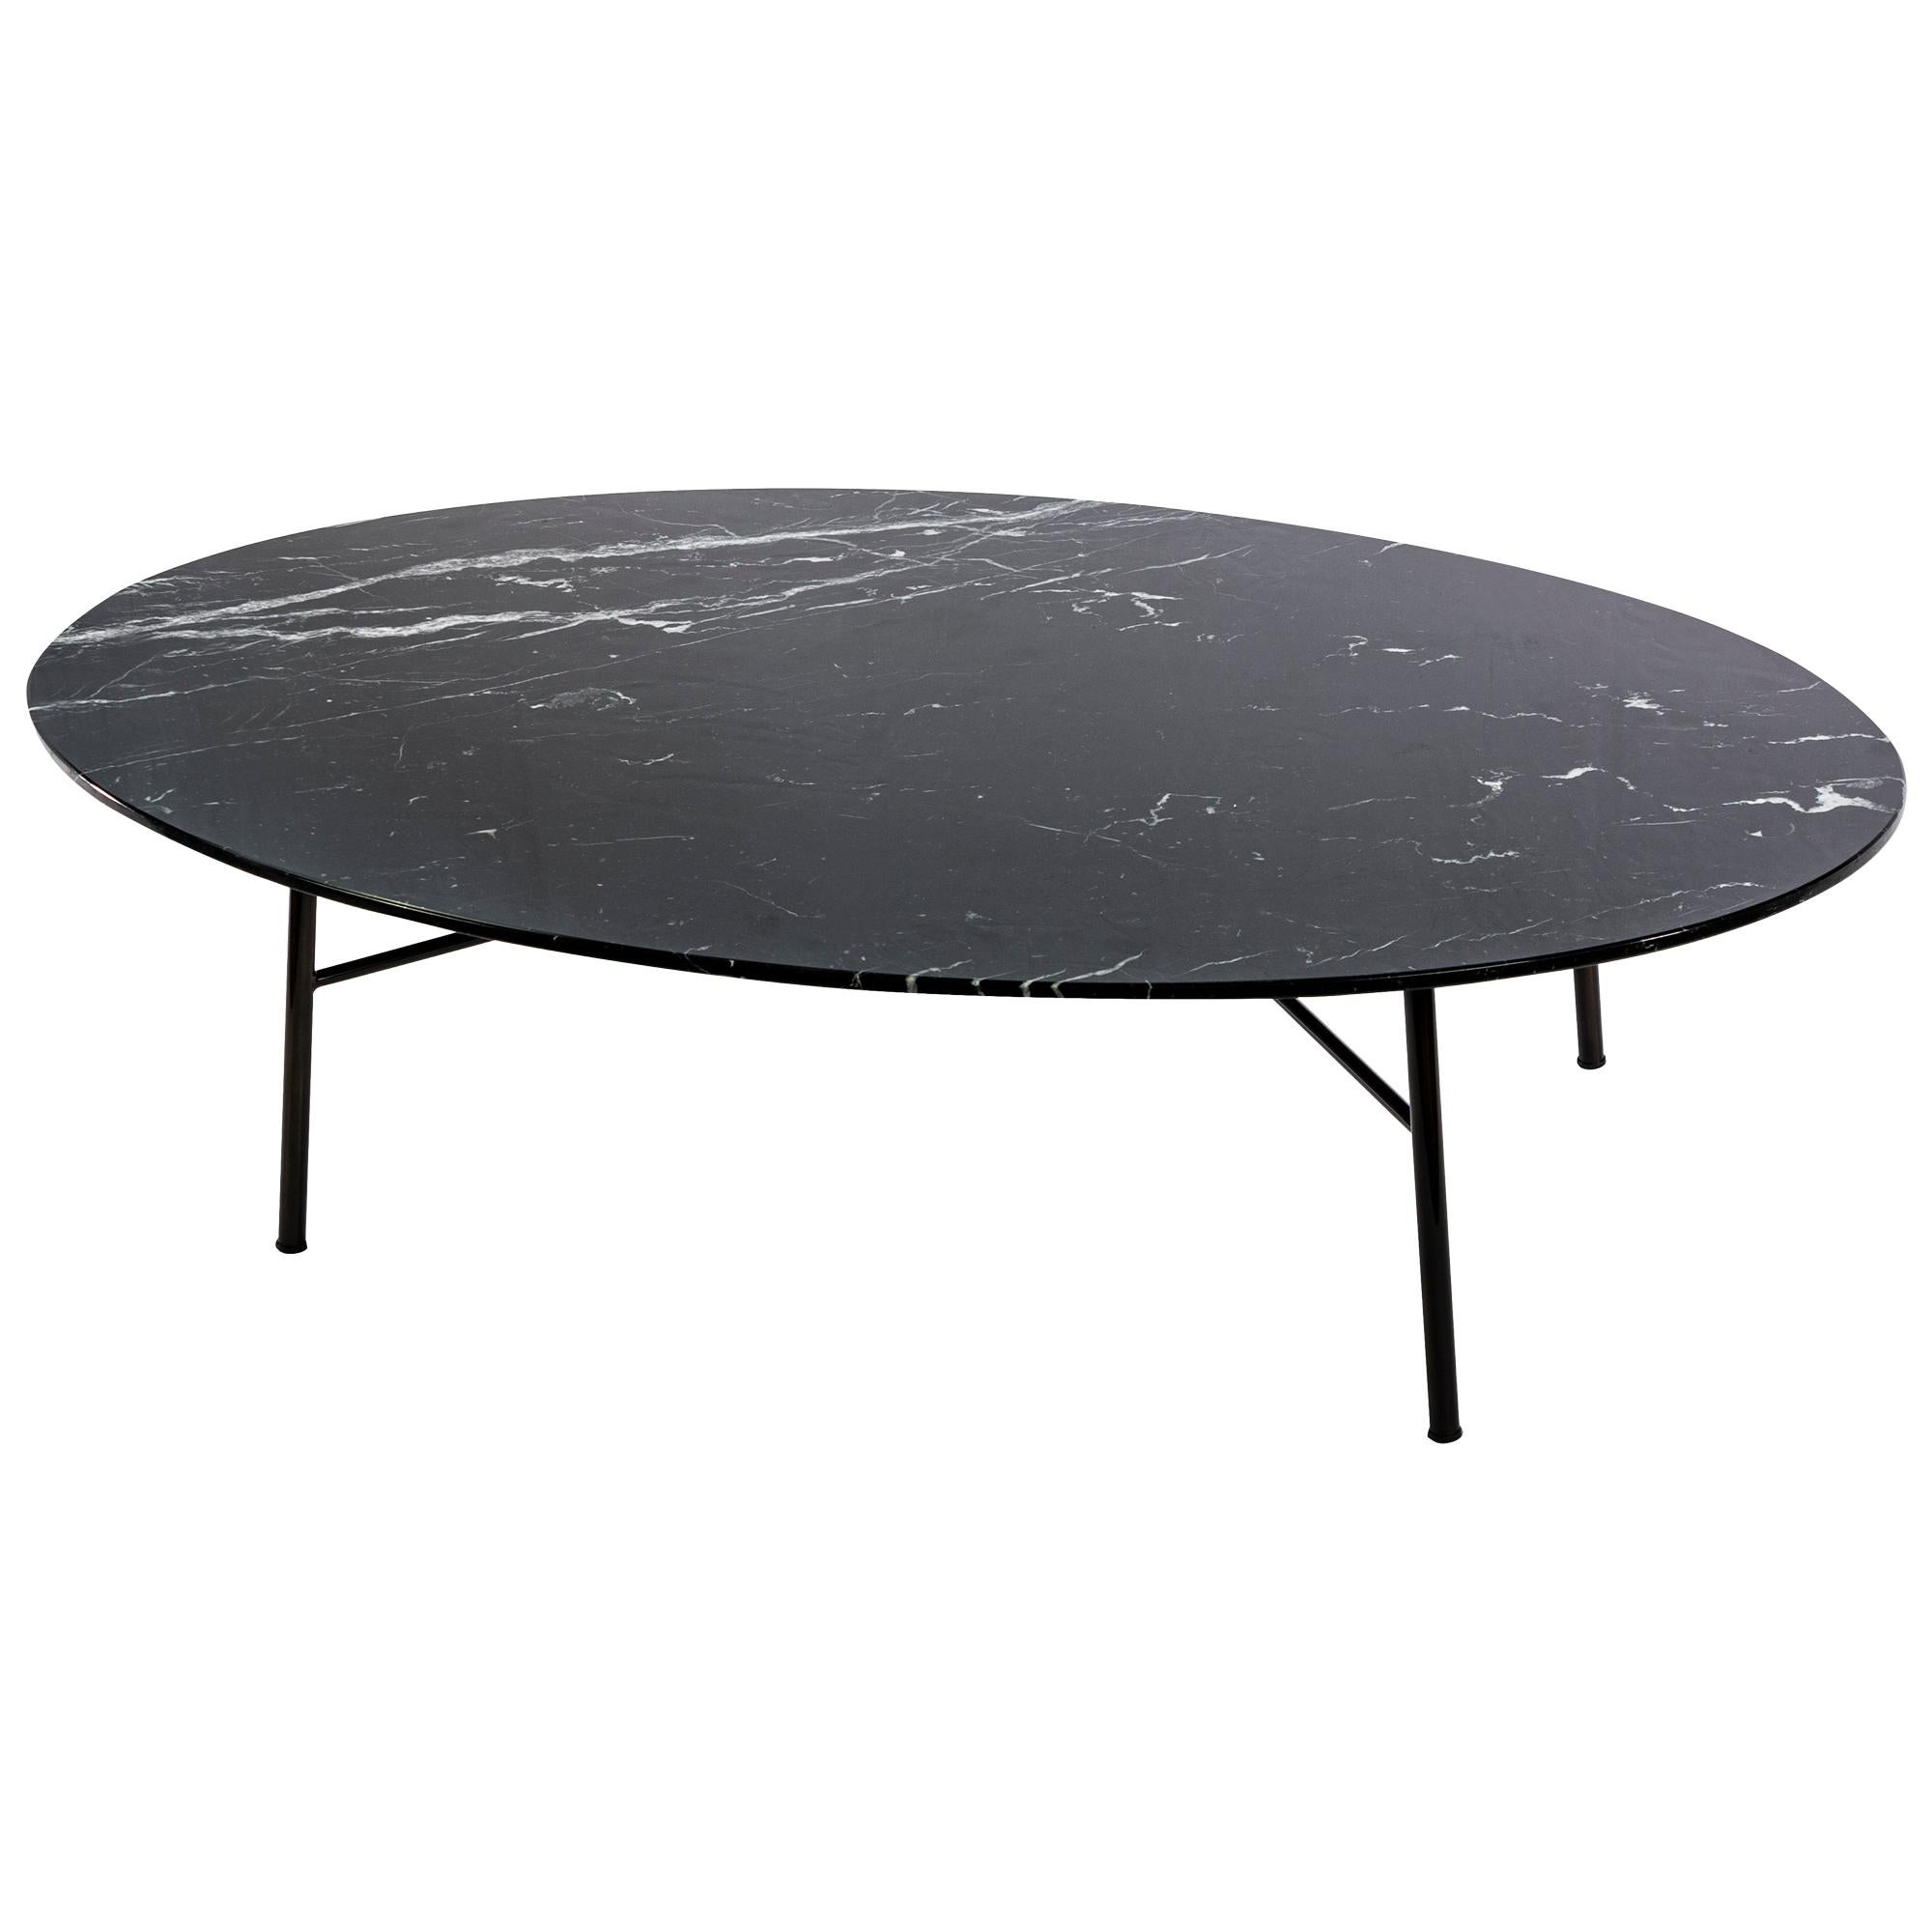 Little Table Yuki, Metal Frame, Round, Black Color, Design, Coffee Table